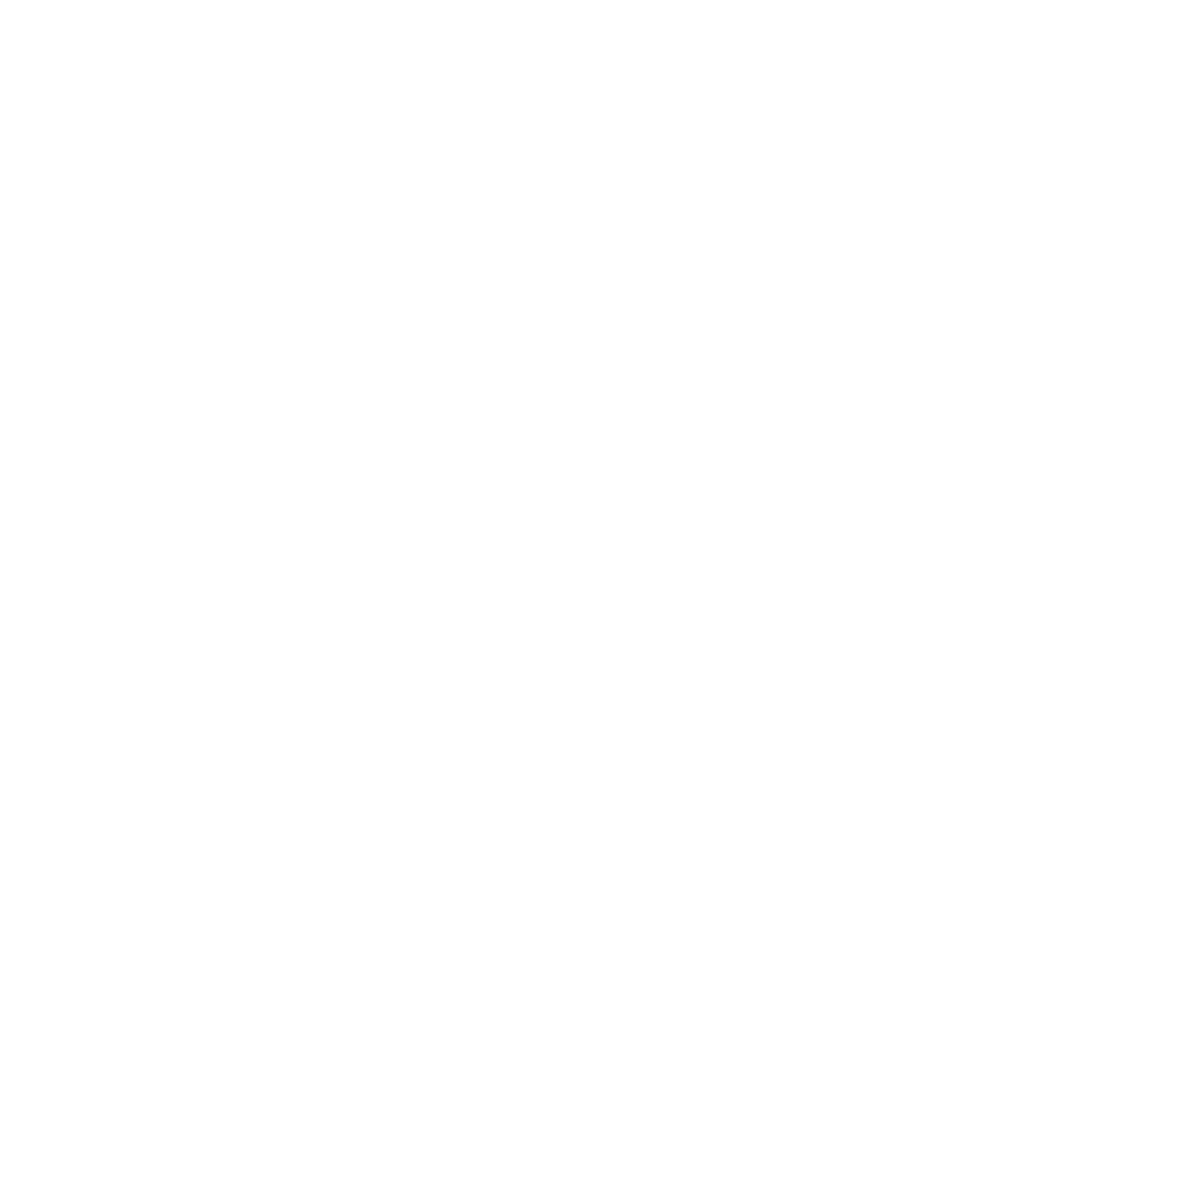 Those Production Girls